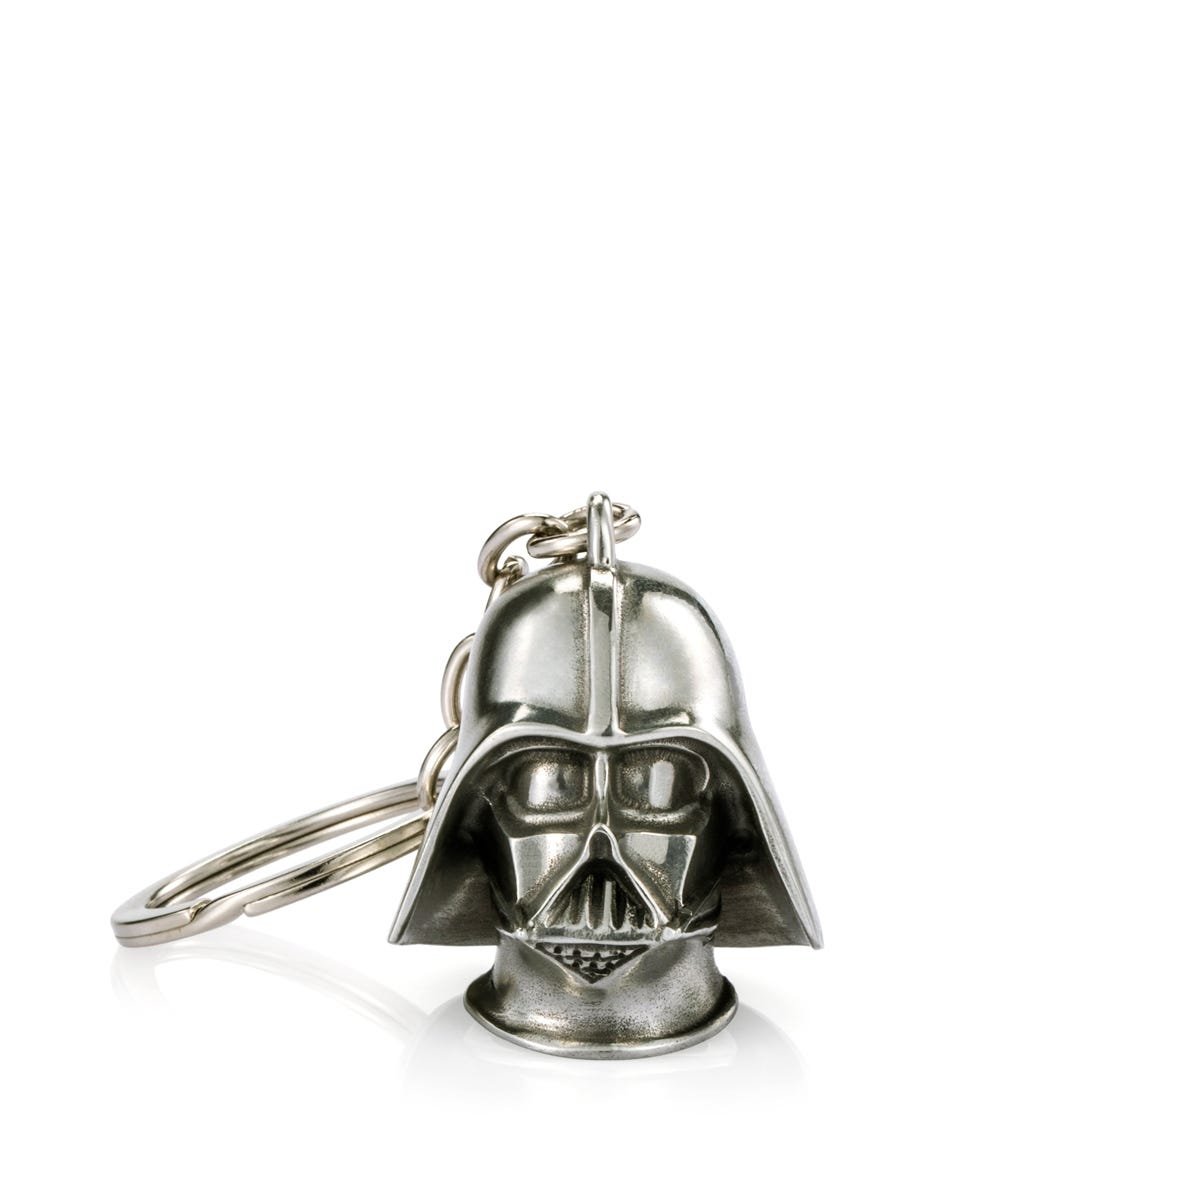 Royal Selangor Star Wars Vader Keychain - Pewter - Notbrand